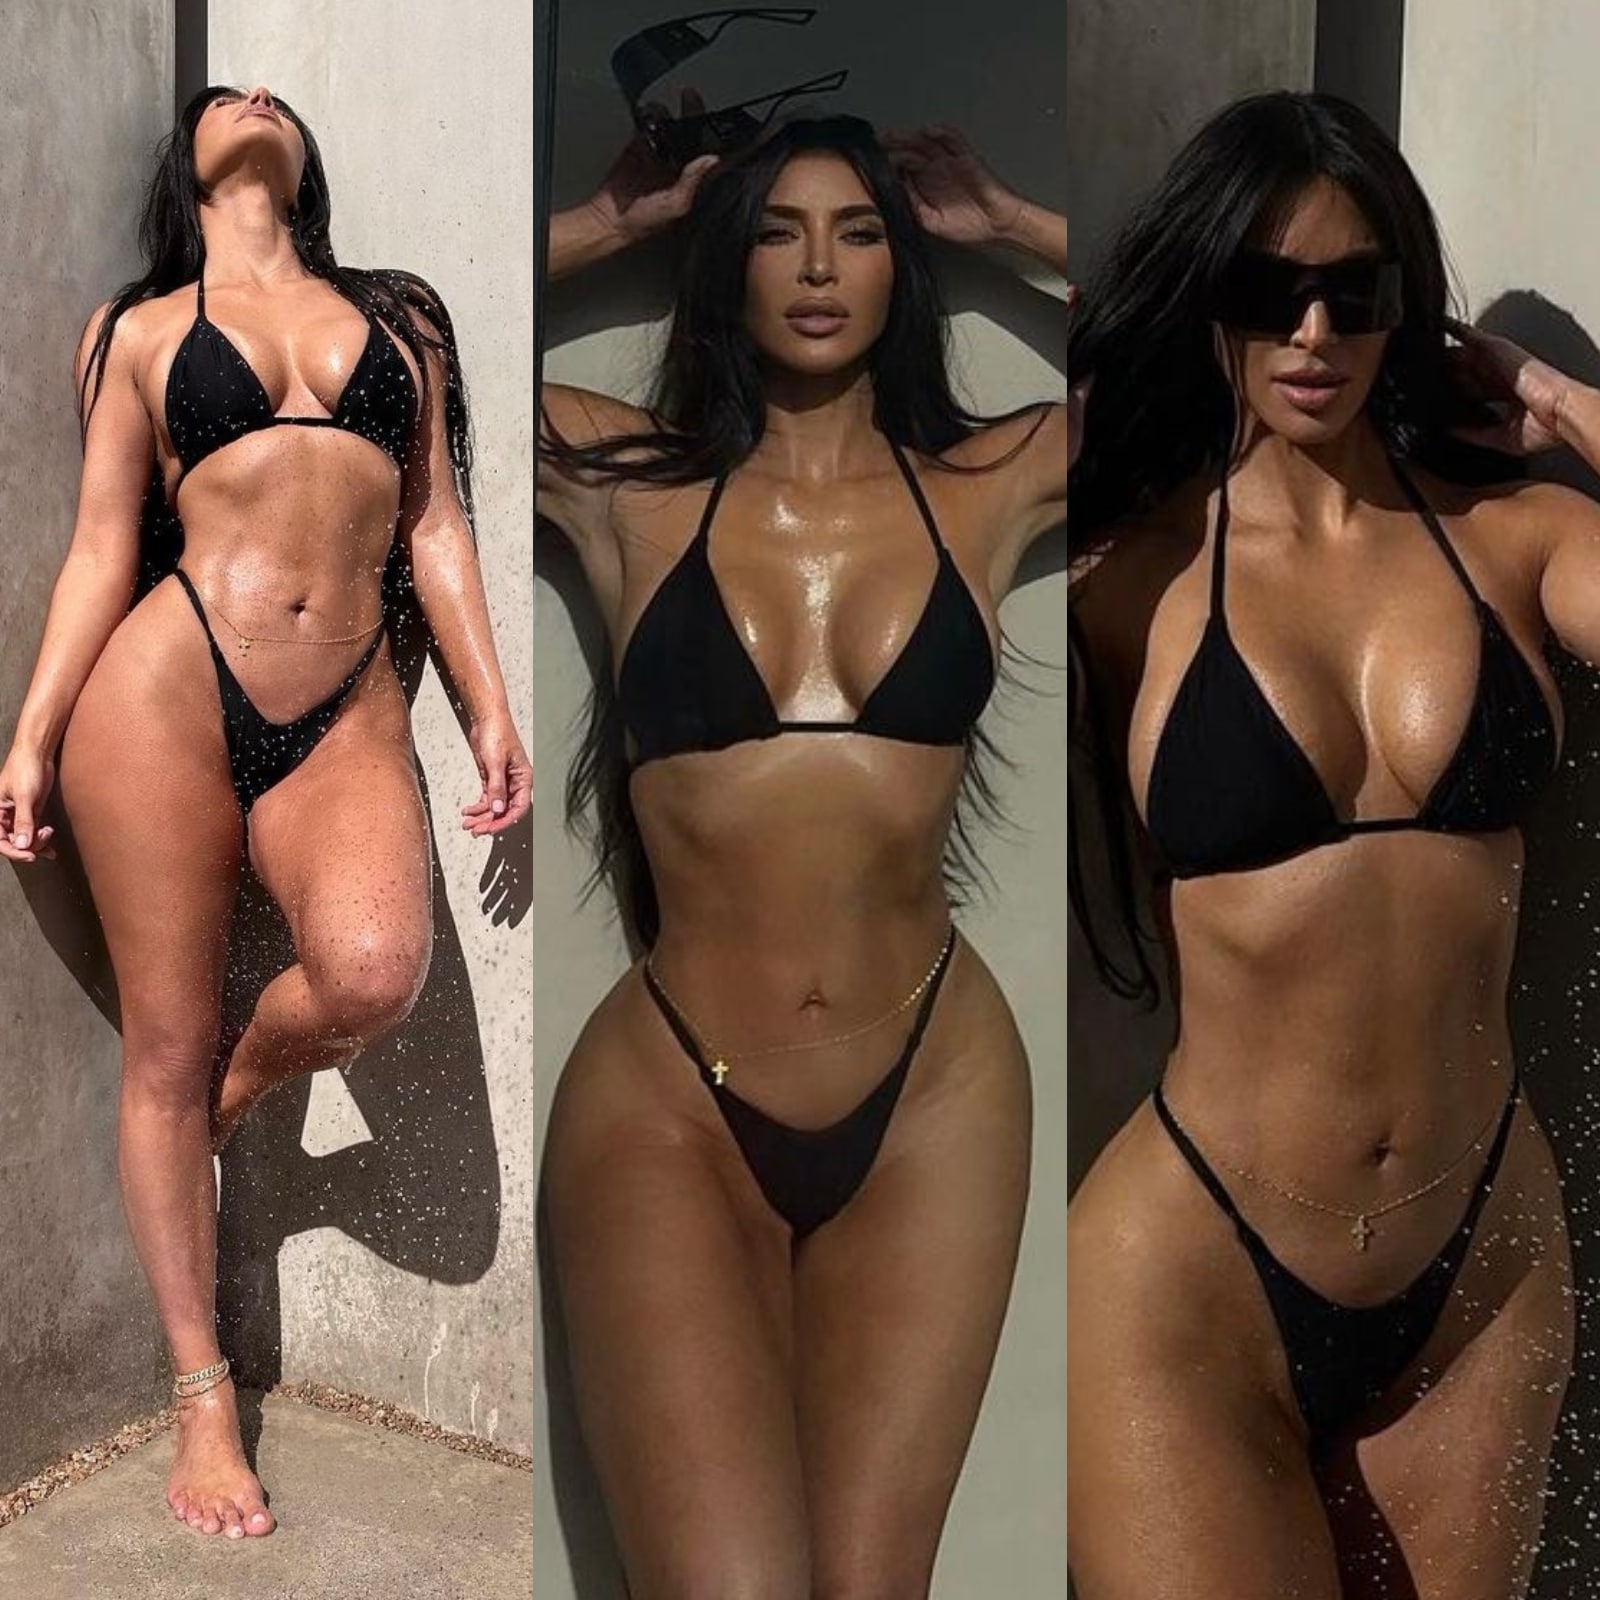 Kim Kardashian Sexy Hot - Kim Kardashian Flaunts Ripped Abs In Skimpy Black Bikini While in Shower;  See Hot Pics